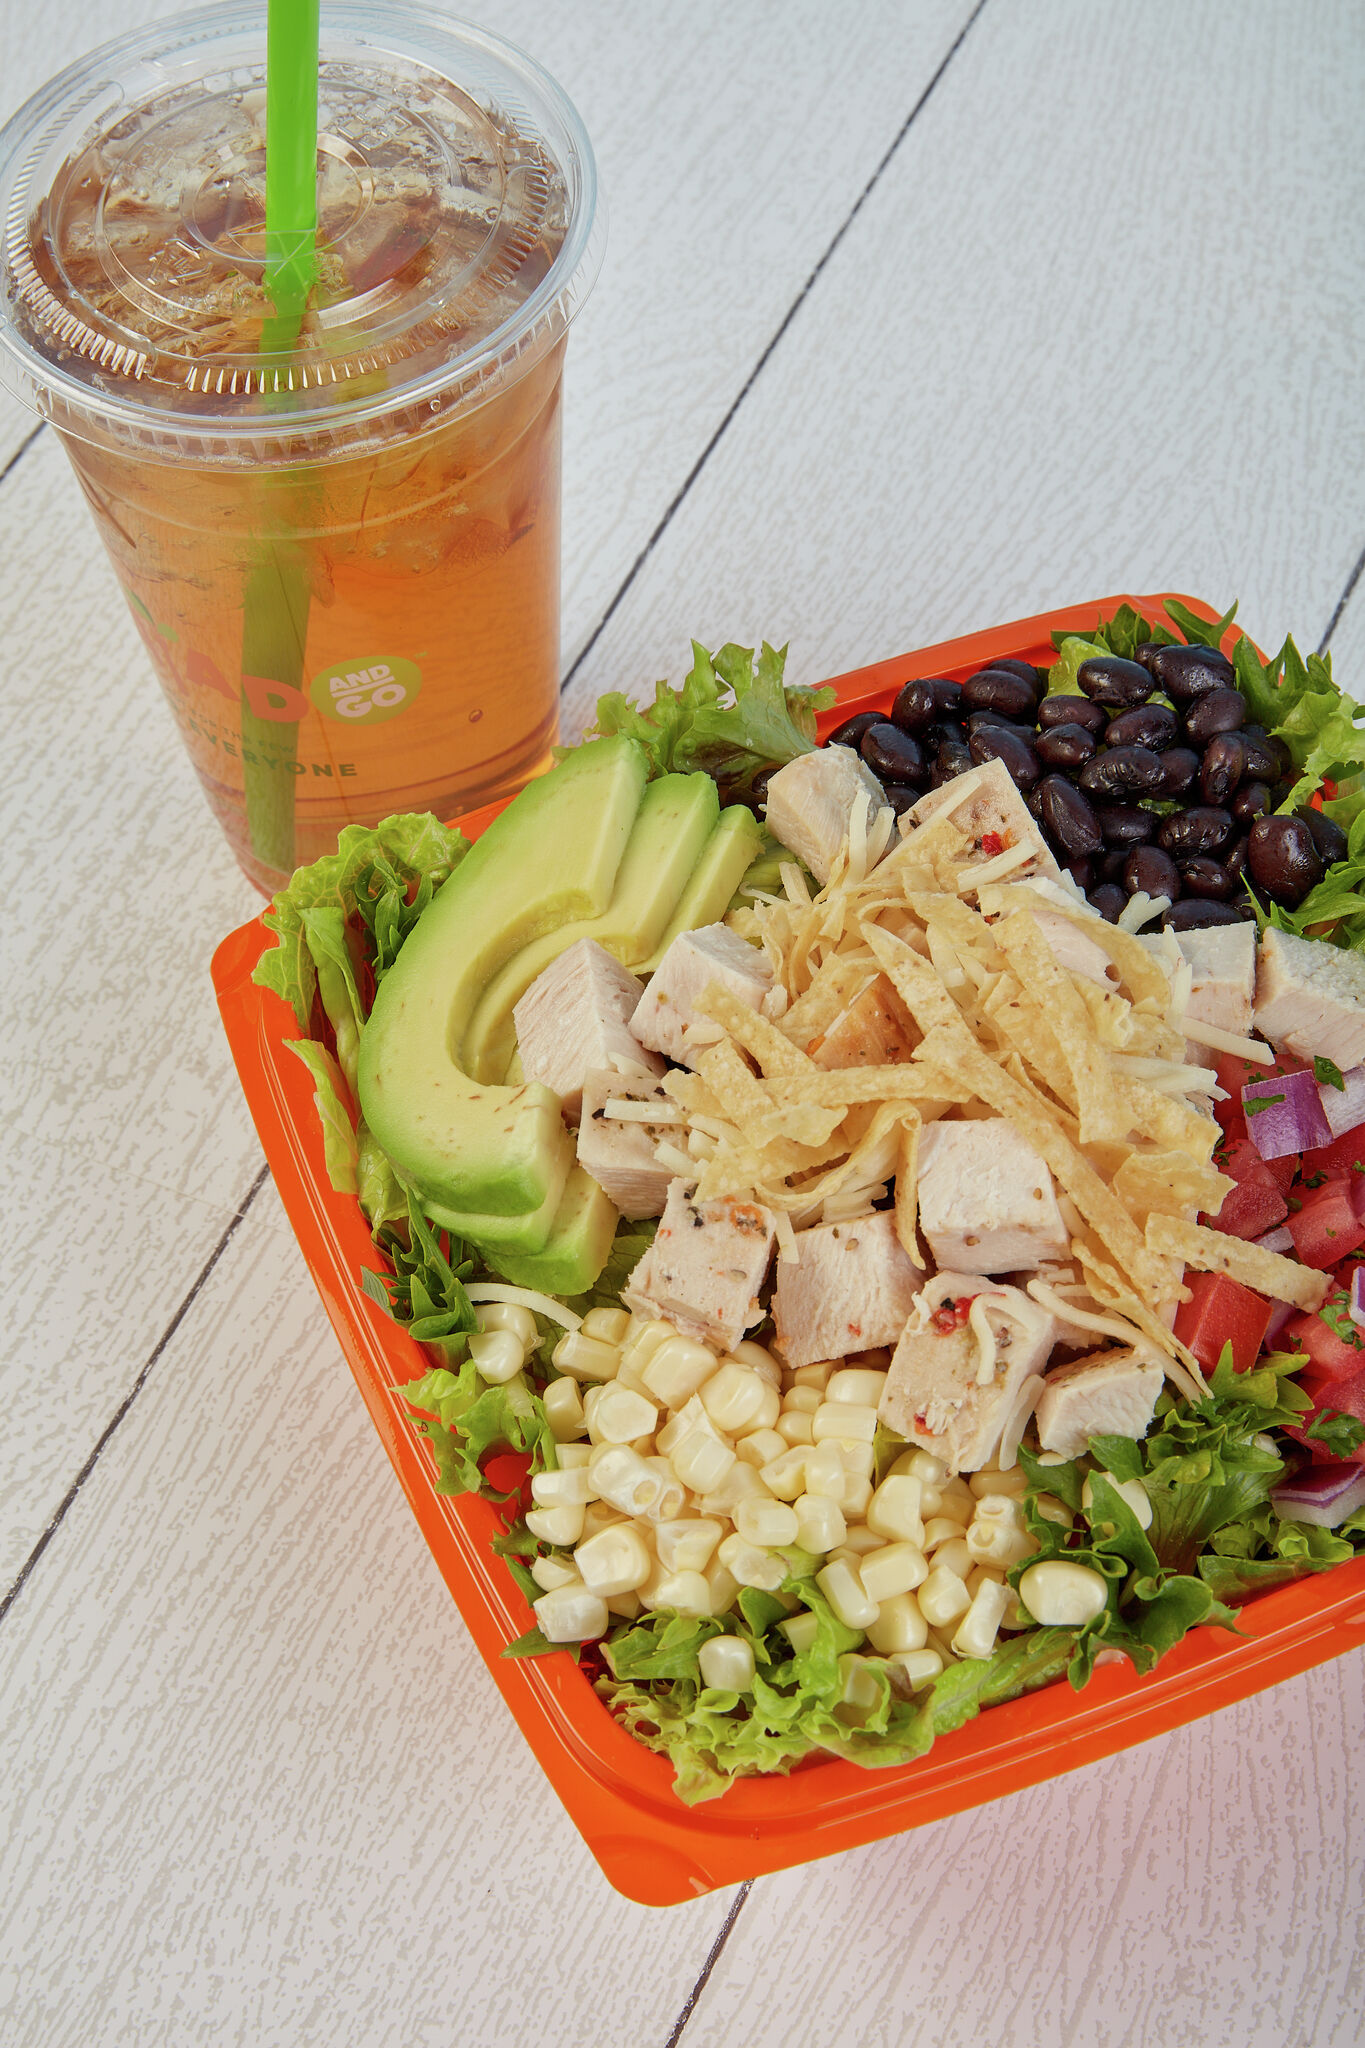 Salad and Go Healthy Fast Food Drive-Thru Salad Restaurant Tour